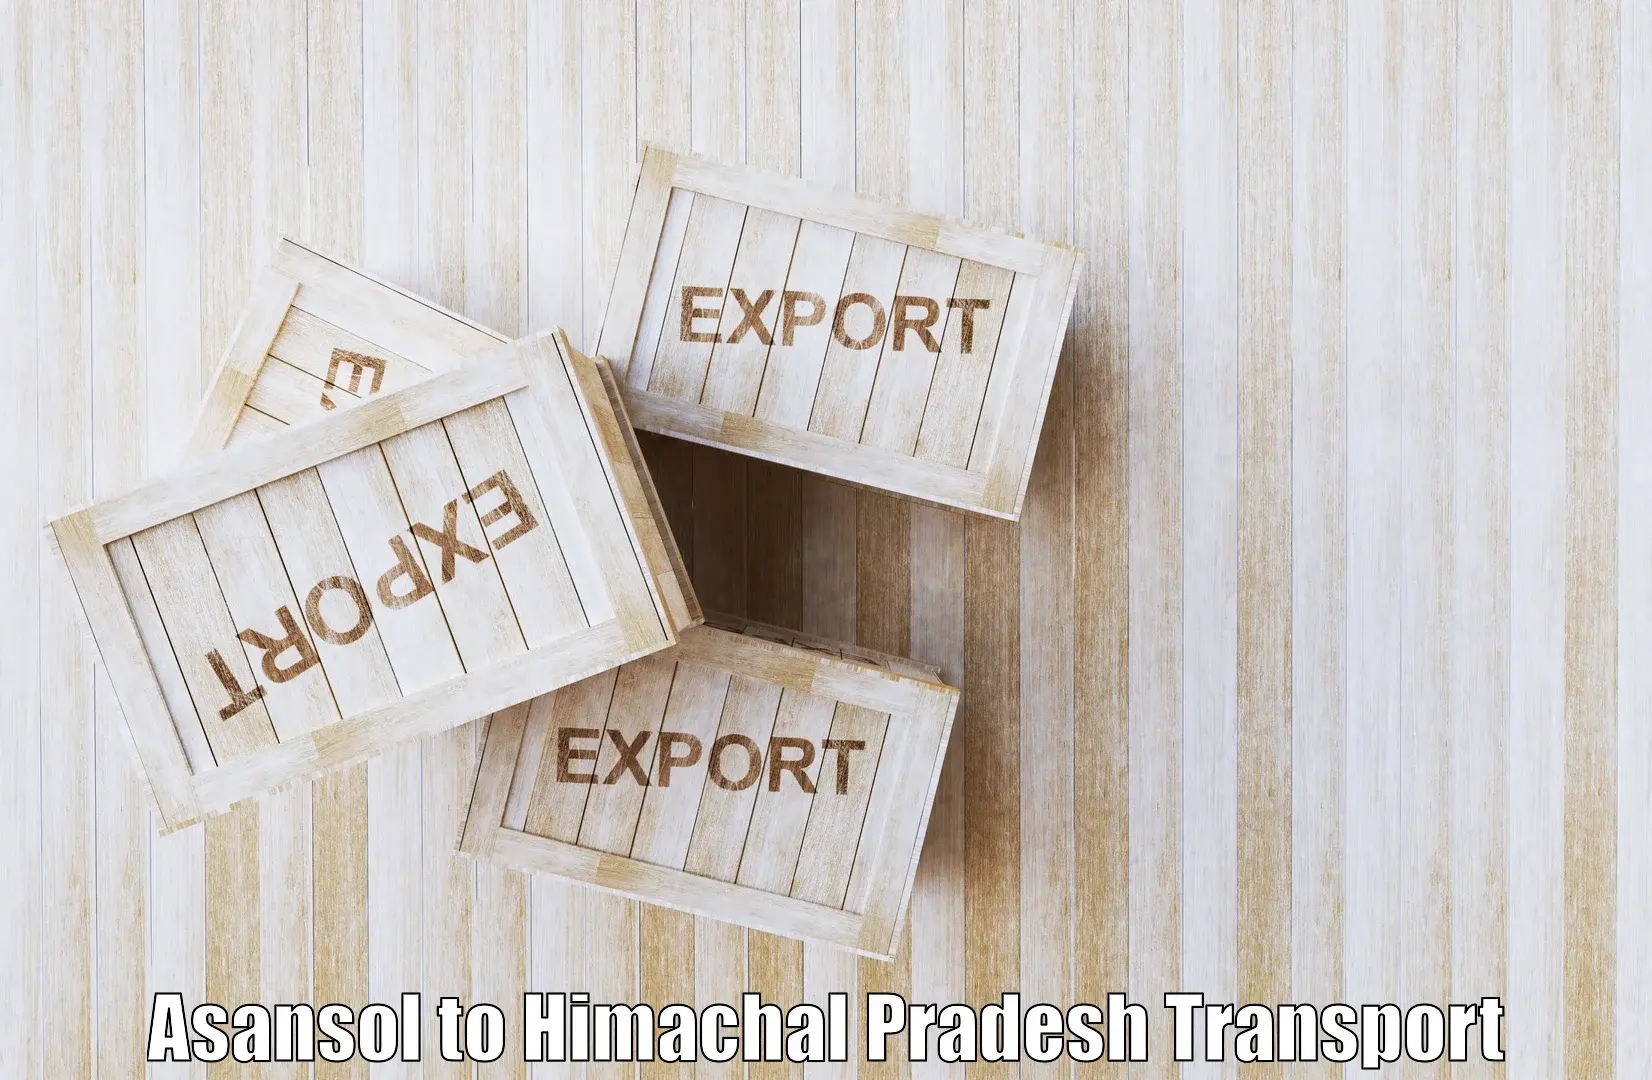 Shipping partner Asansol to Jaisinghpur